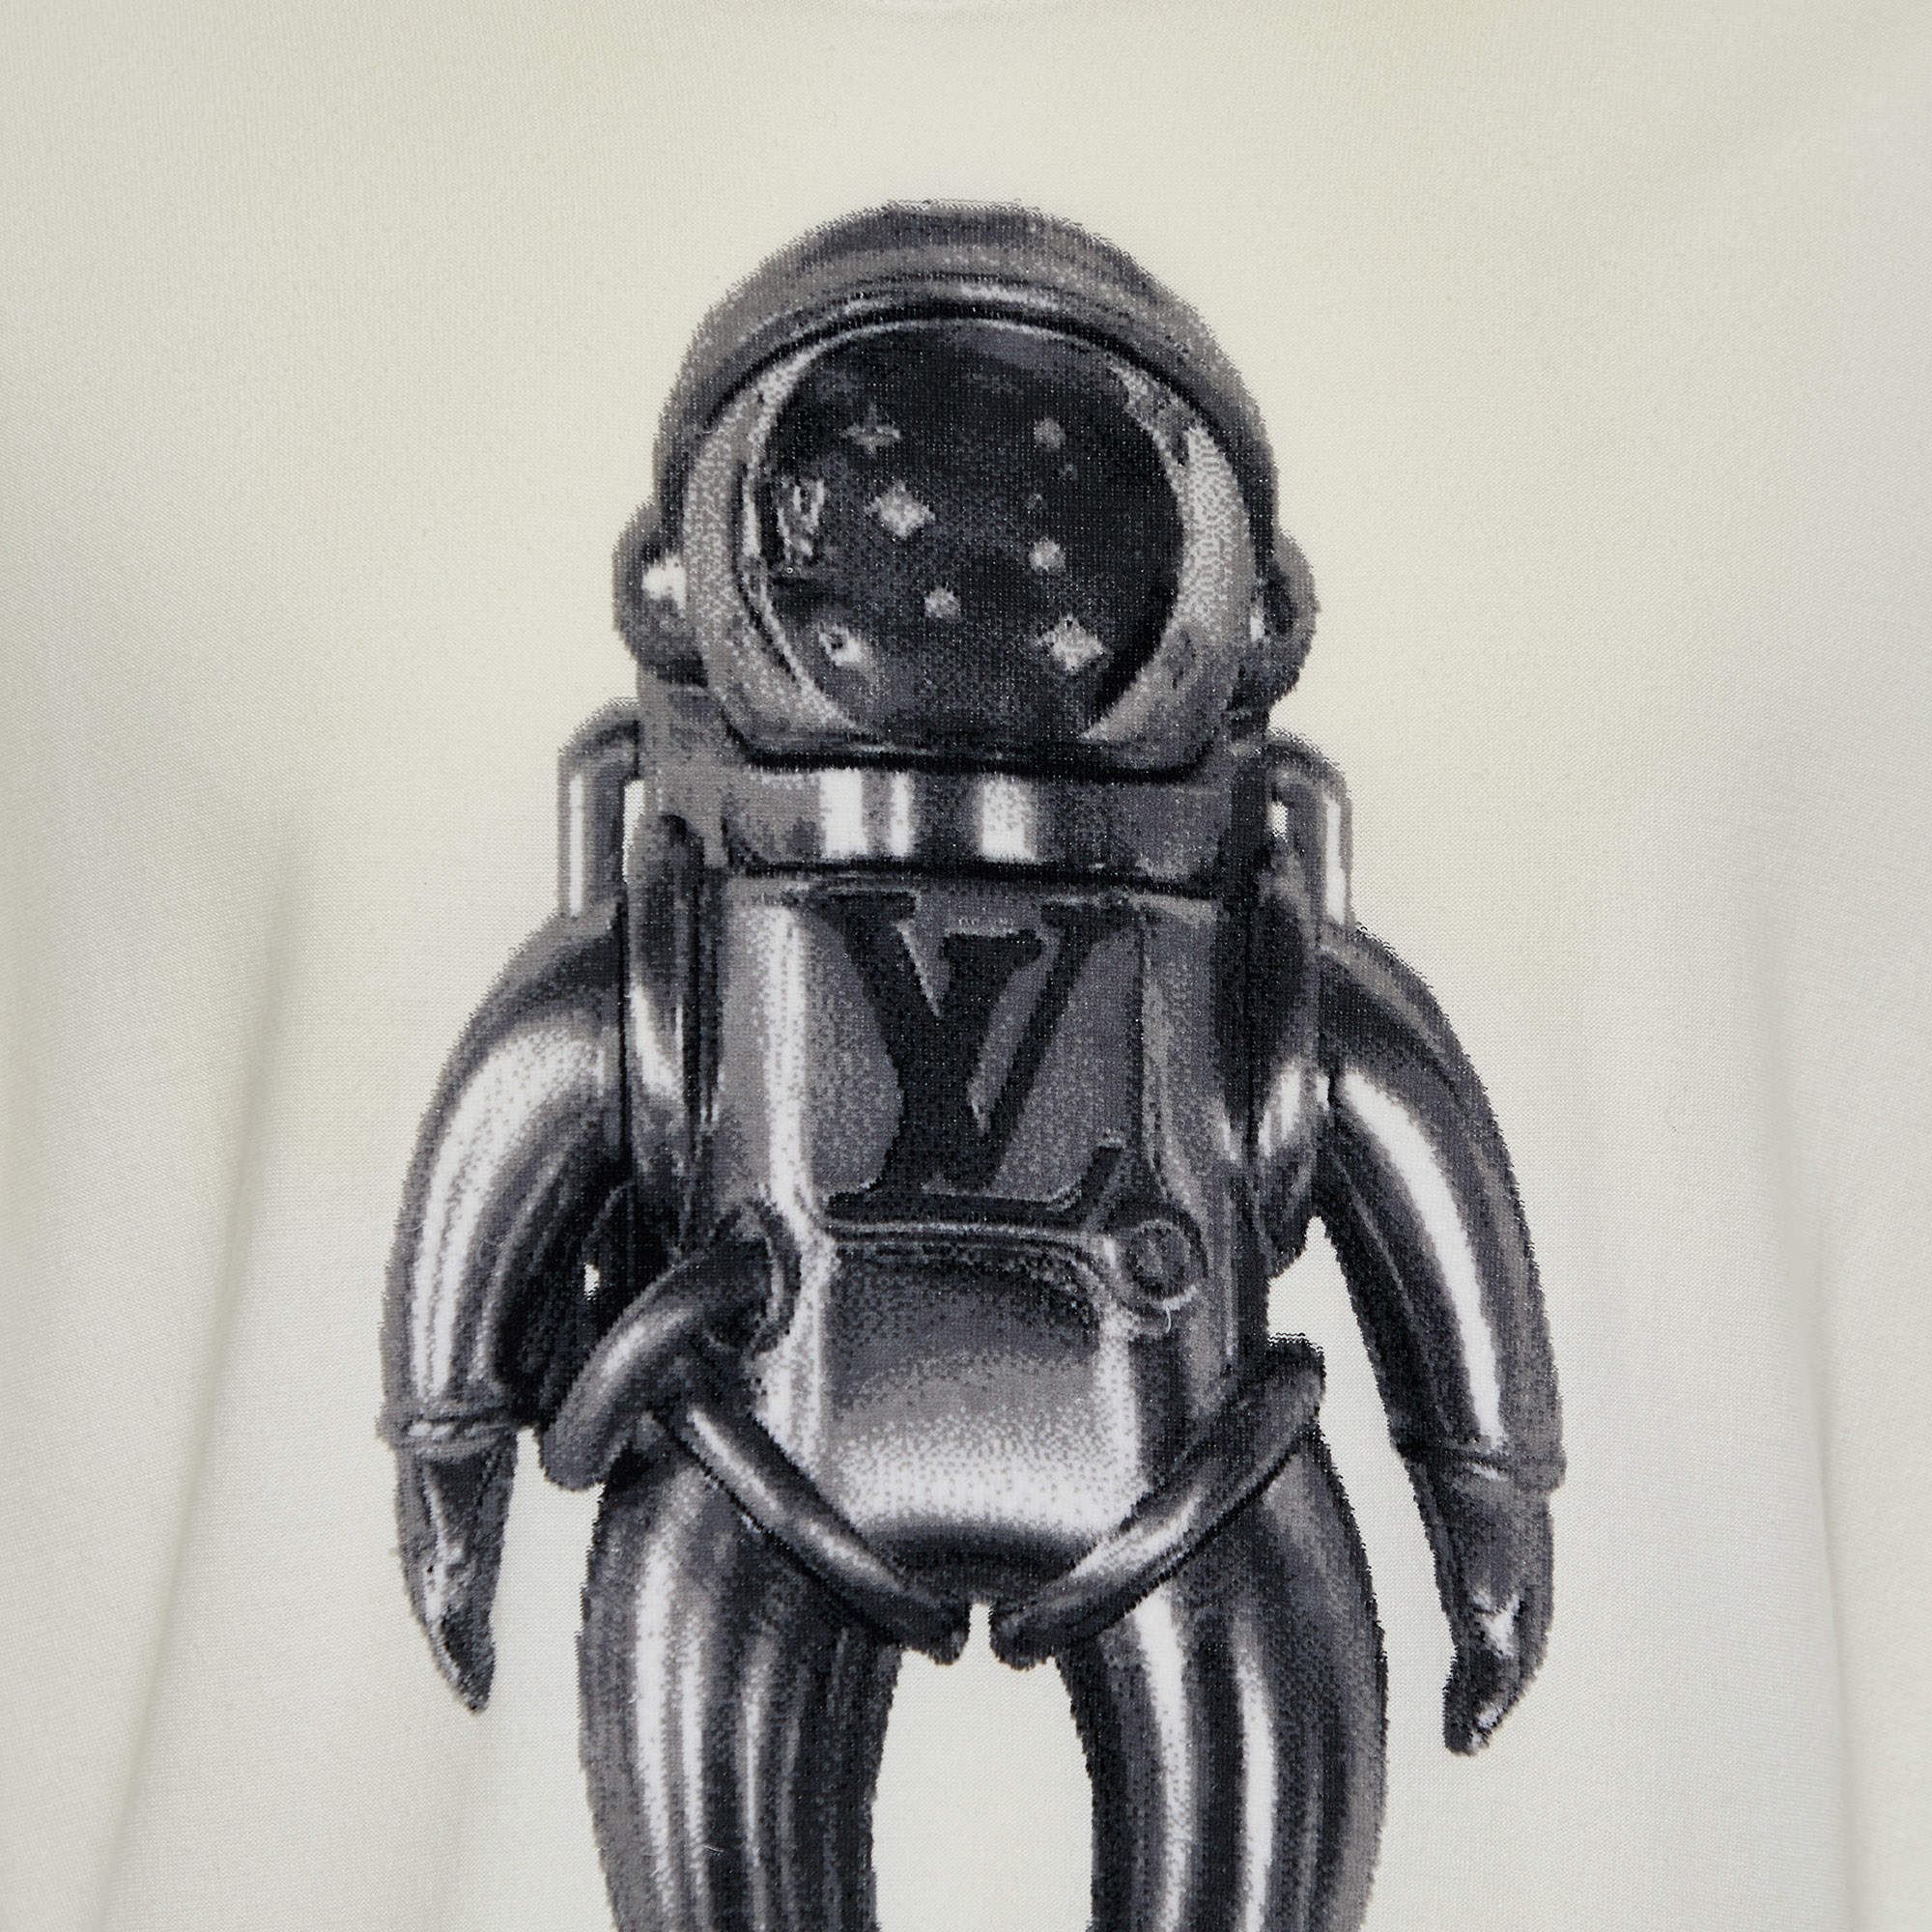 Cotton Jacquard Velour Spaceman Motif T-Shirt